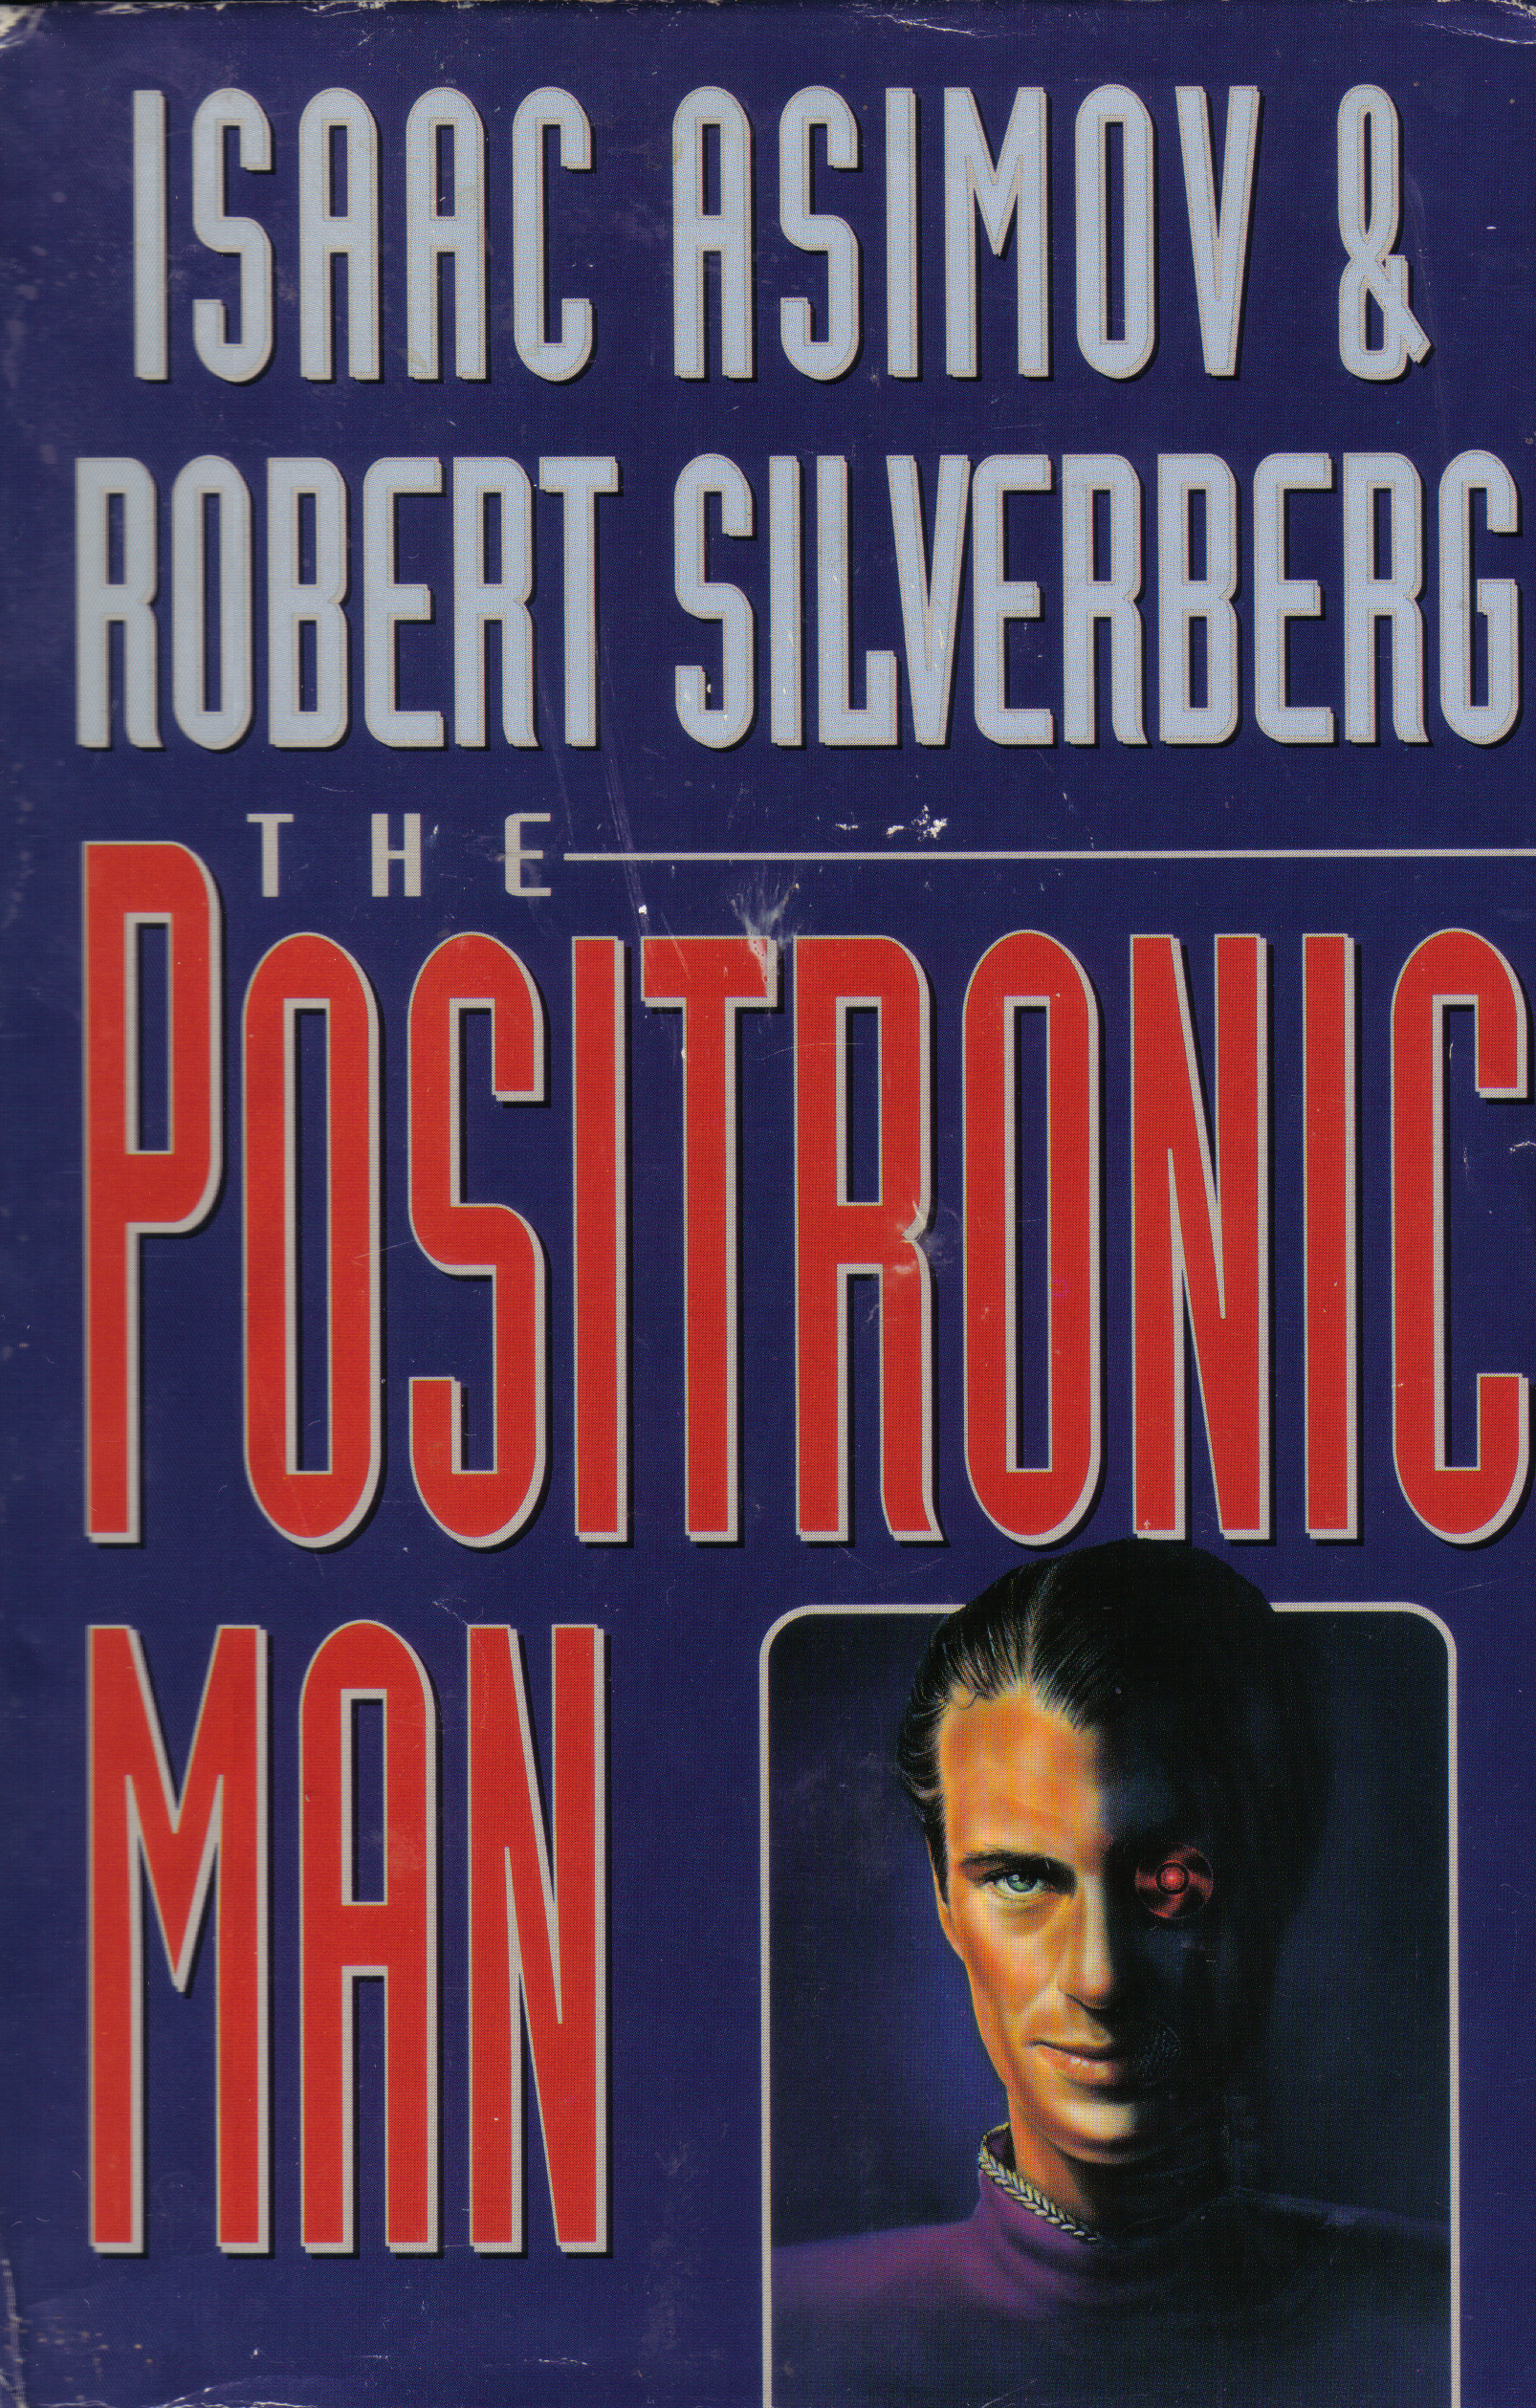 Positronic man